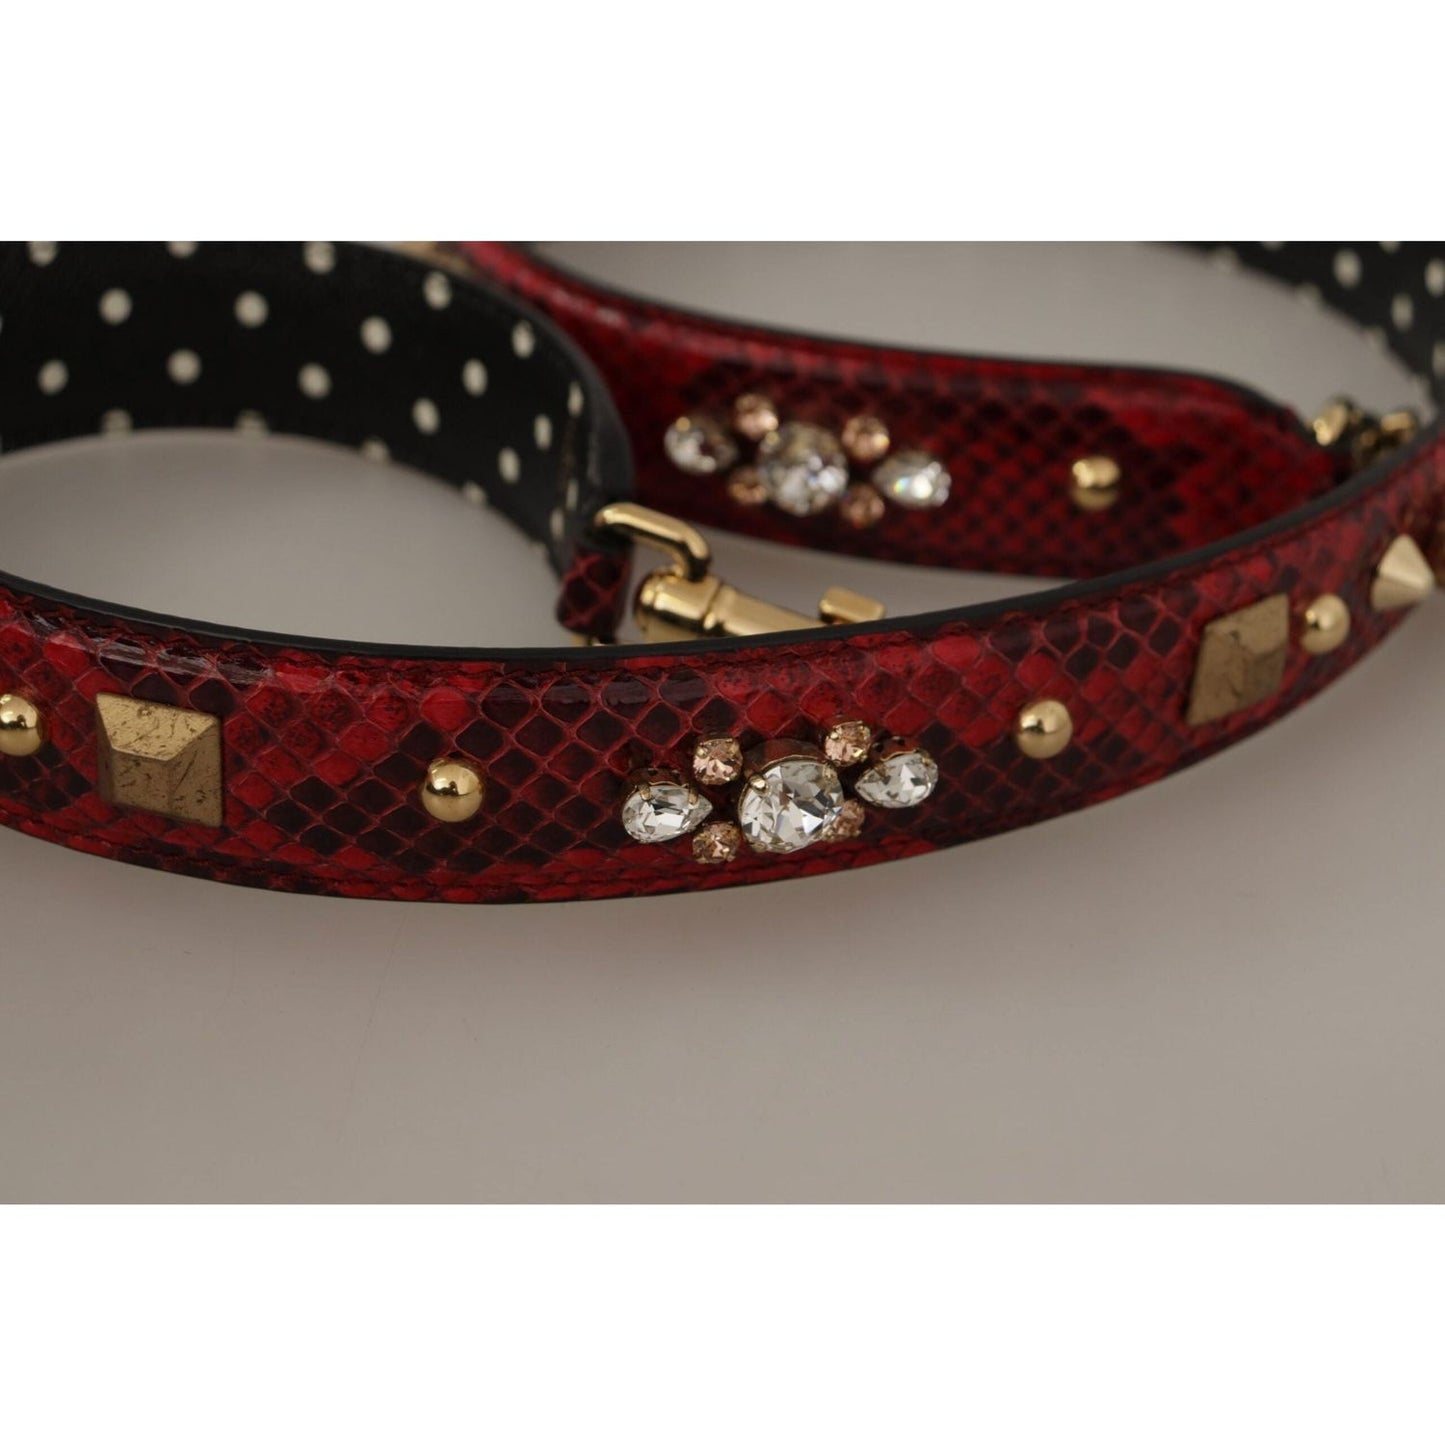 Dolce & Gabbana Red Python Leather Shoulder Bag Strap red-python-leather-crystals-reversible-shoulder-strap IMG_9901-3-scaled-e3805256-191.jpg